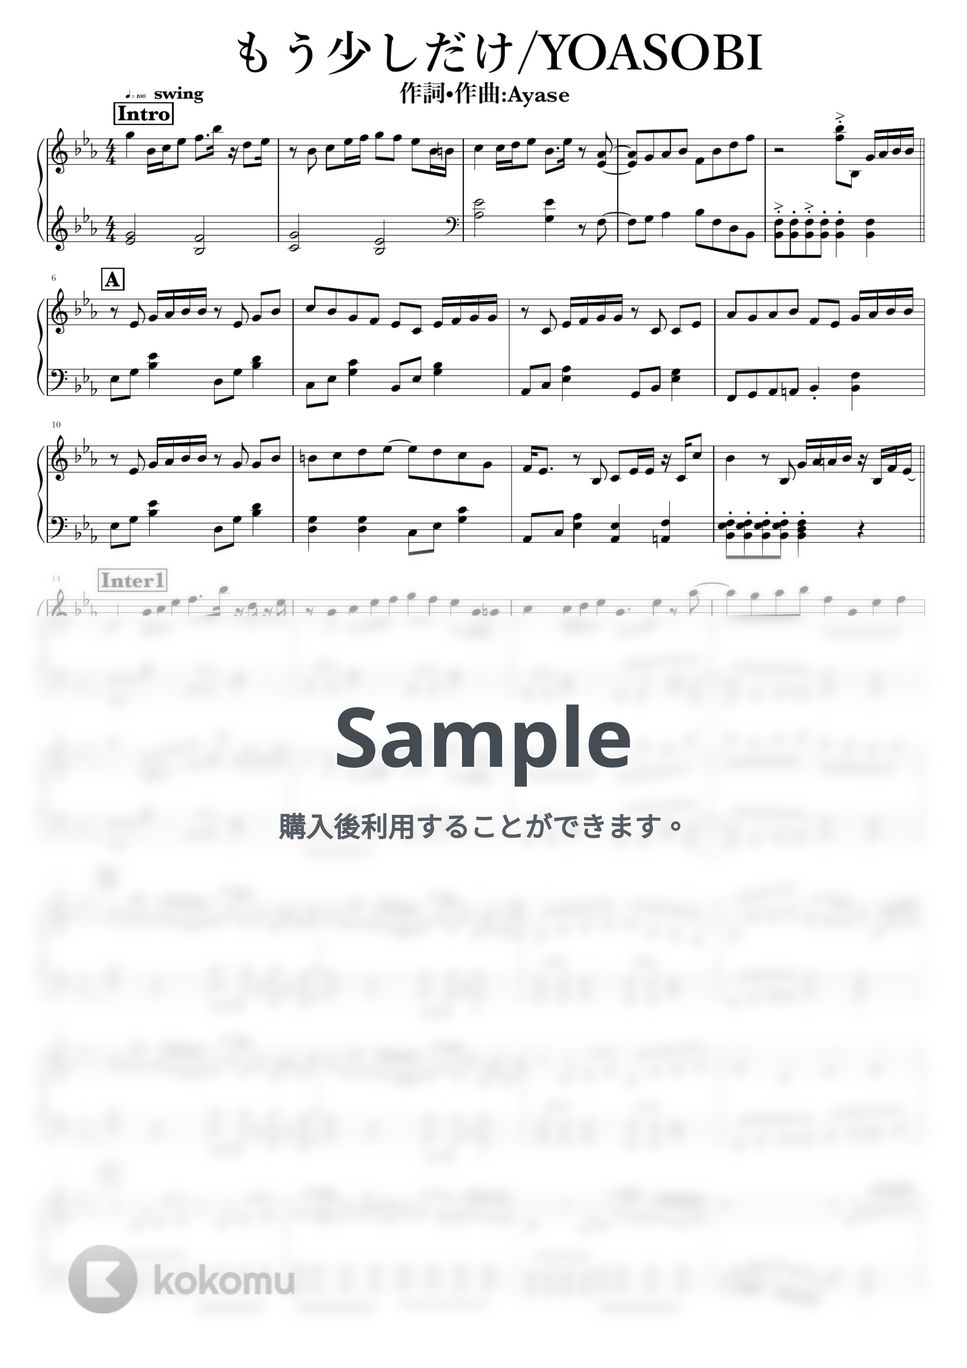 YOASOBI - もう少しだけ by NOTES music